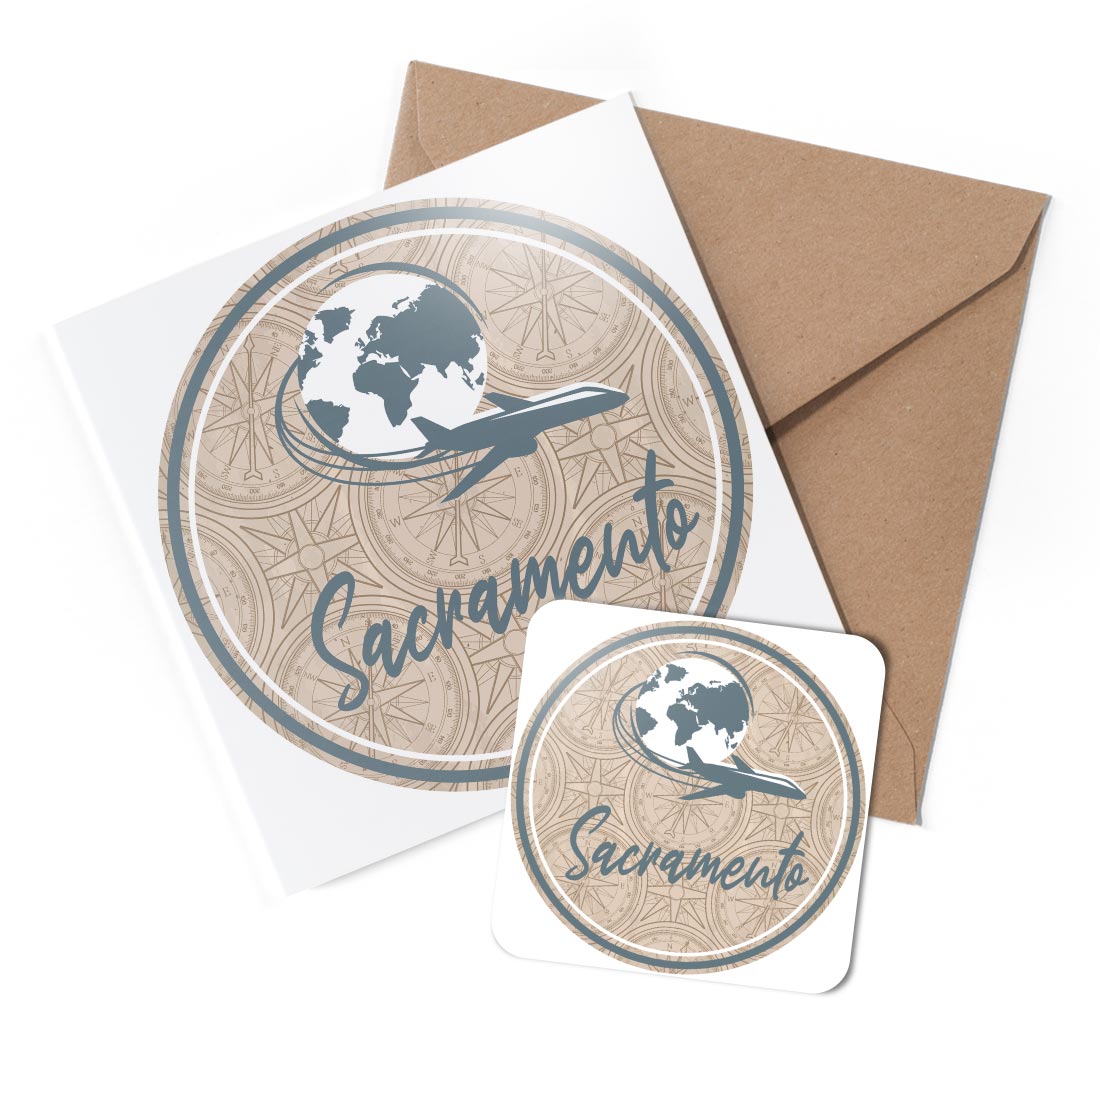 1 x Greeting Card & Coaster Set - Sacramento USA World Travel America #59982